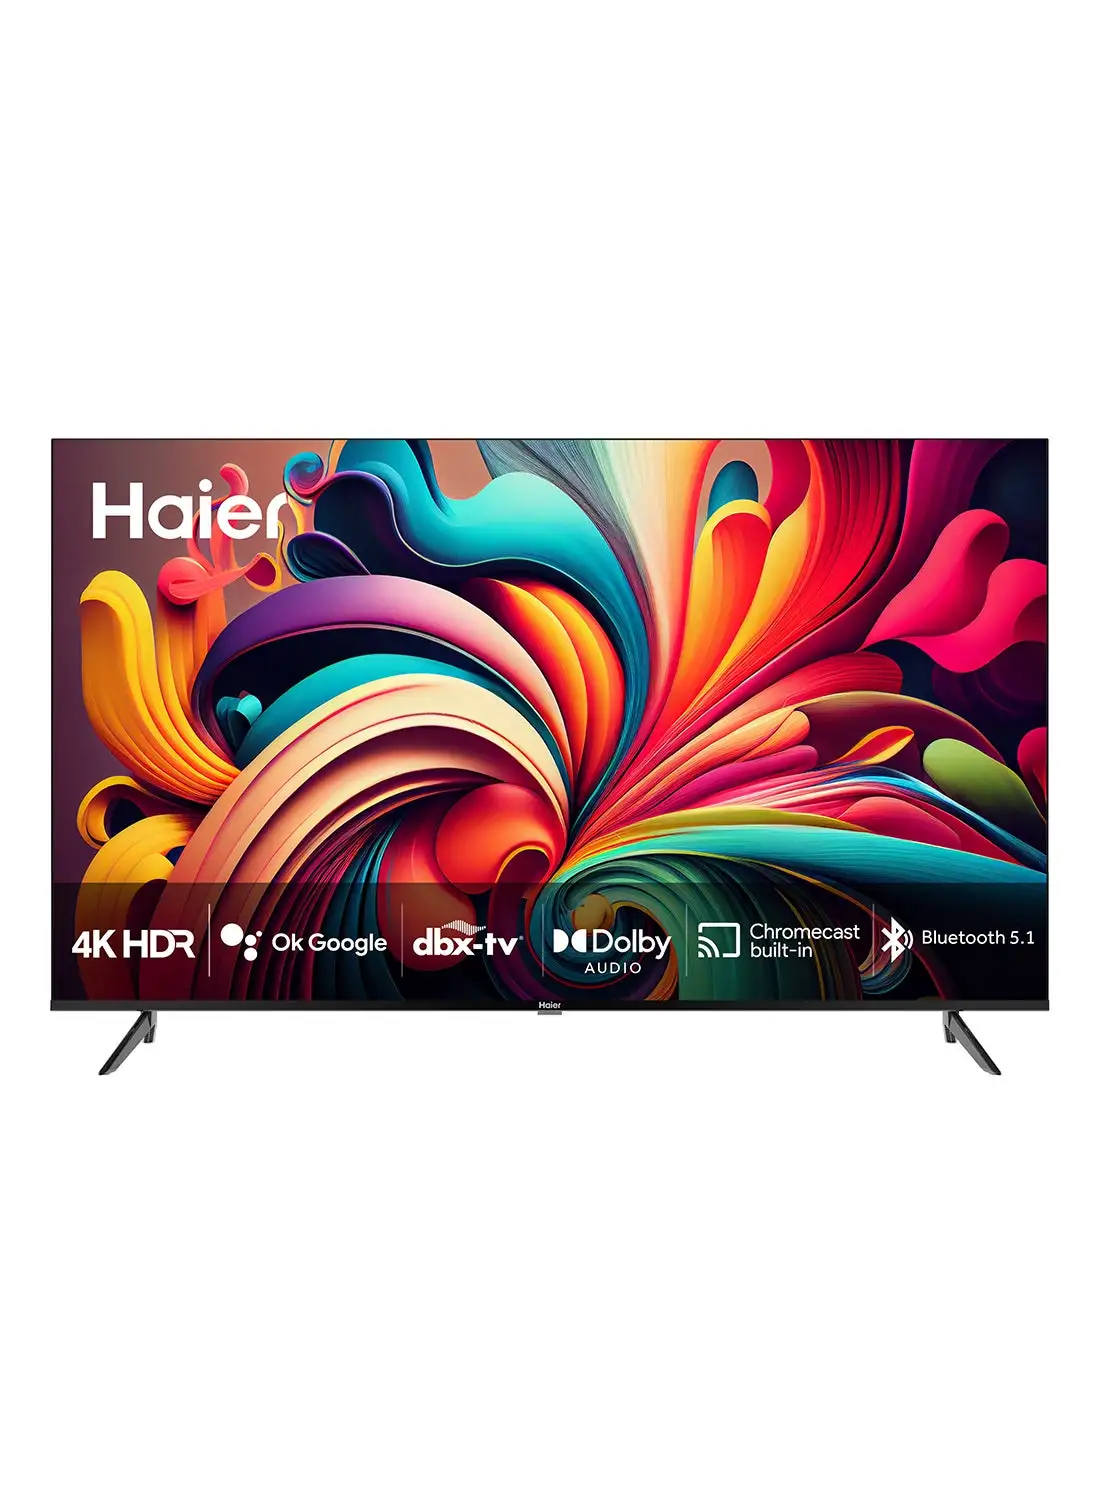 Haier 55-Inch Smart TV Android 4K UHD H55K800UG Black